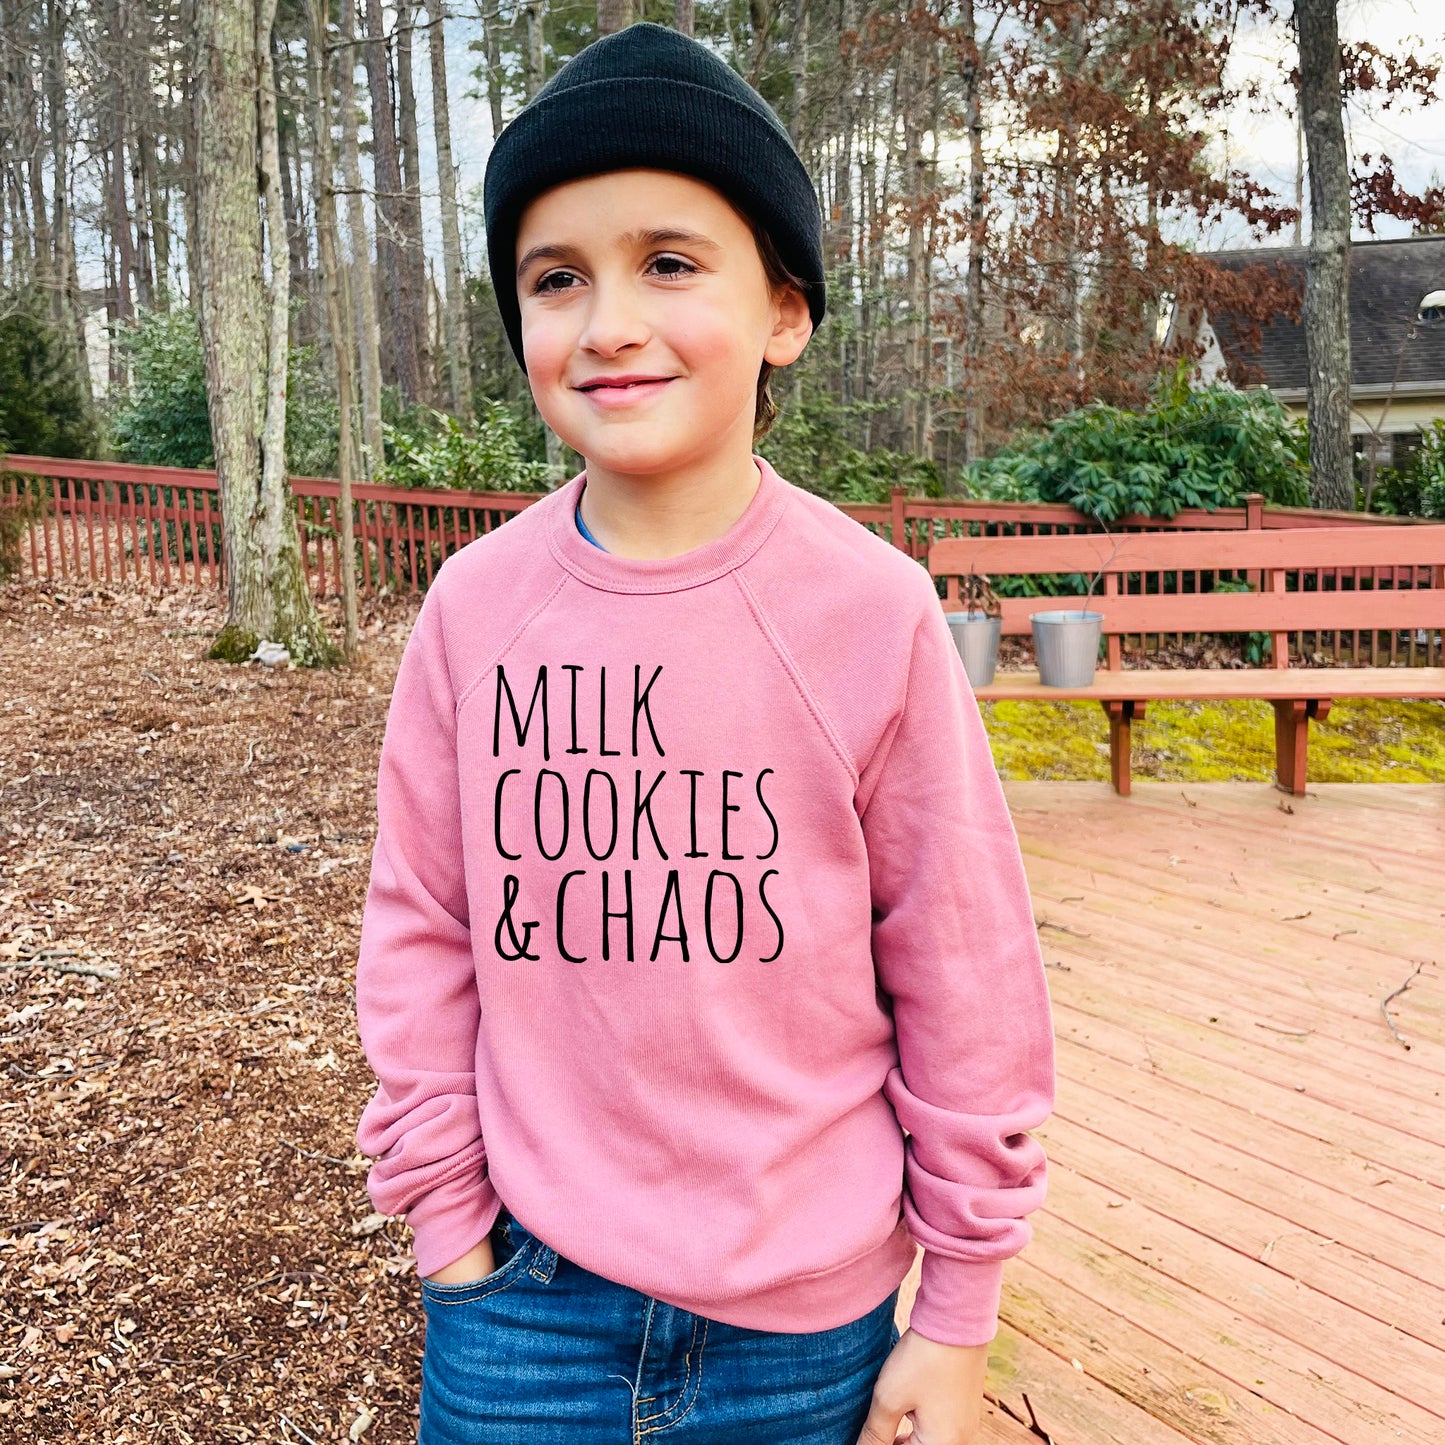 Milk Cookies & Chaos - Kid's Sweatshirt - Heather Gray or Mauve